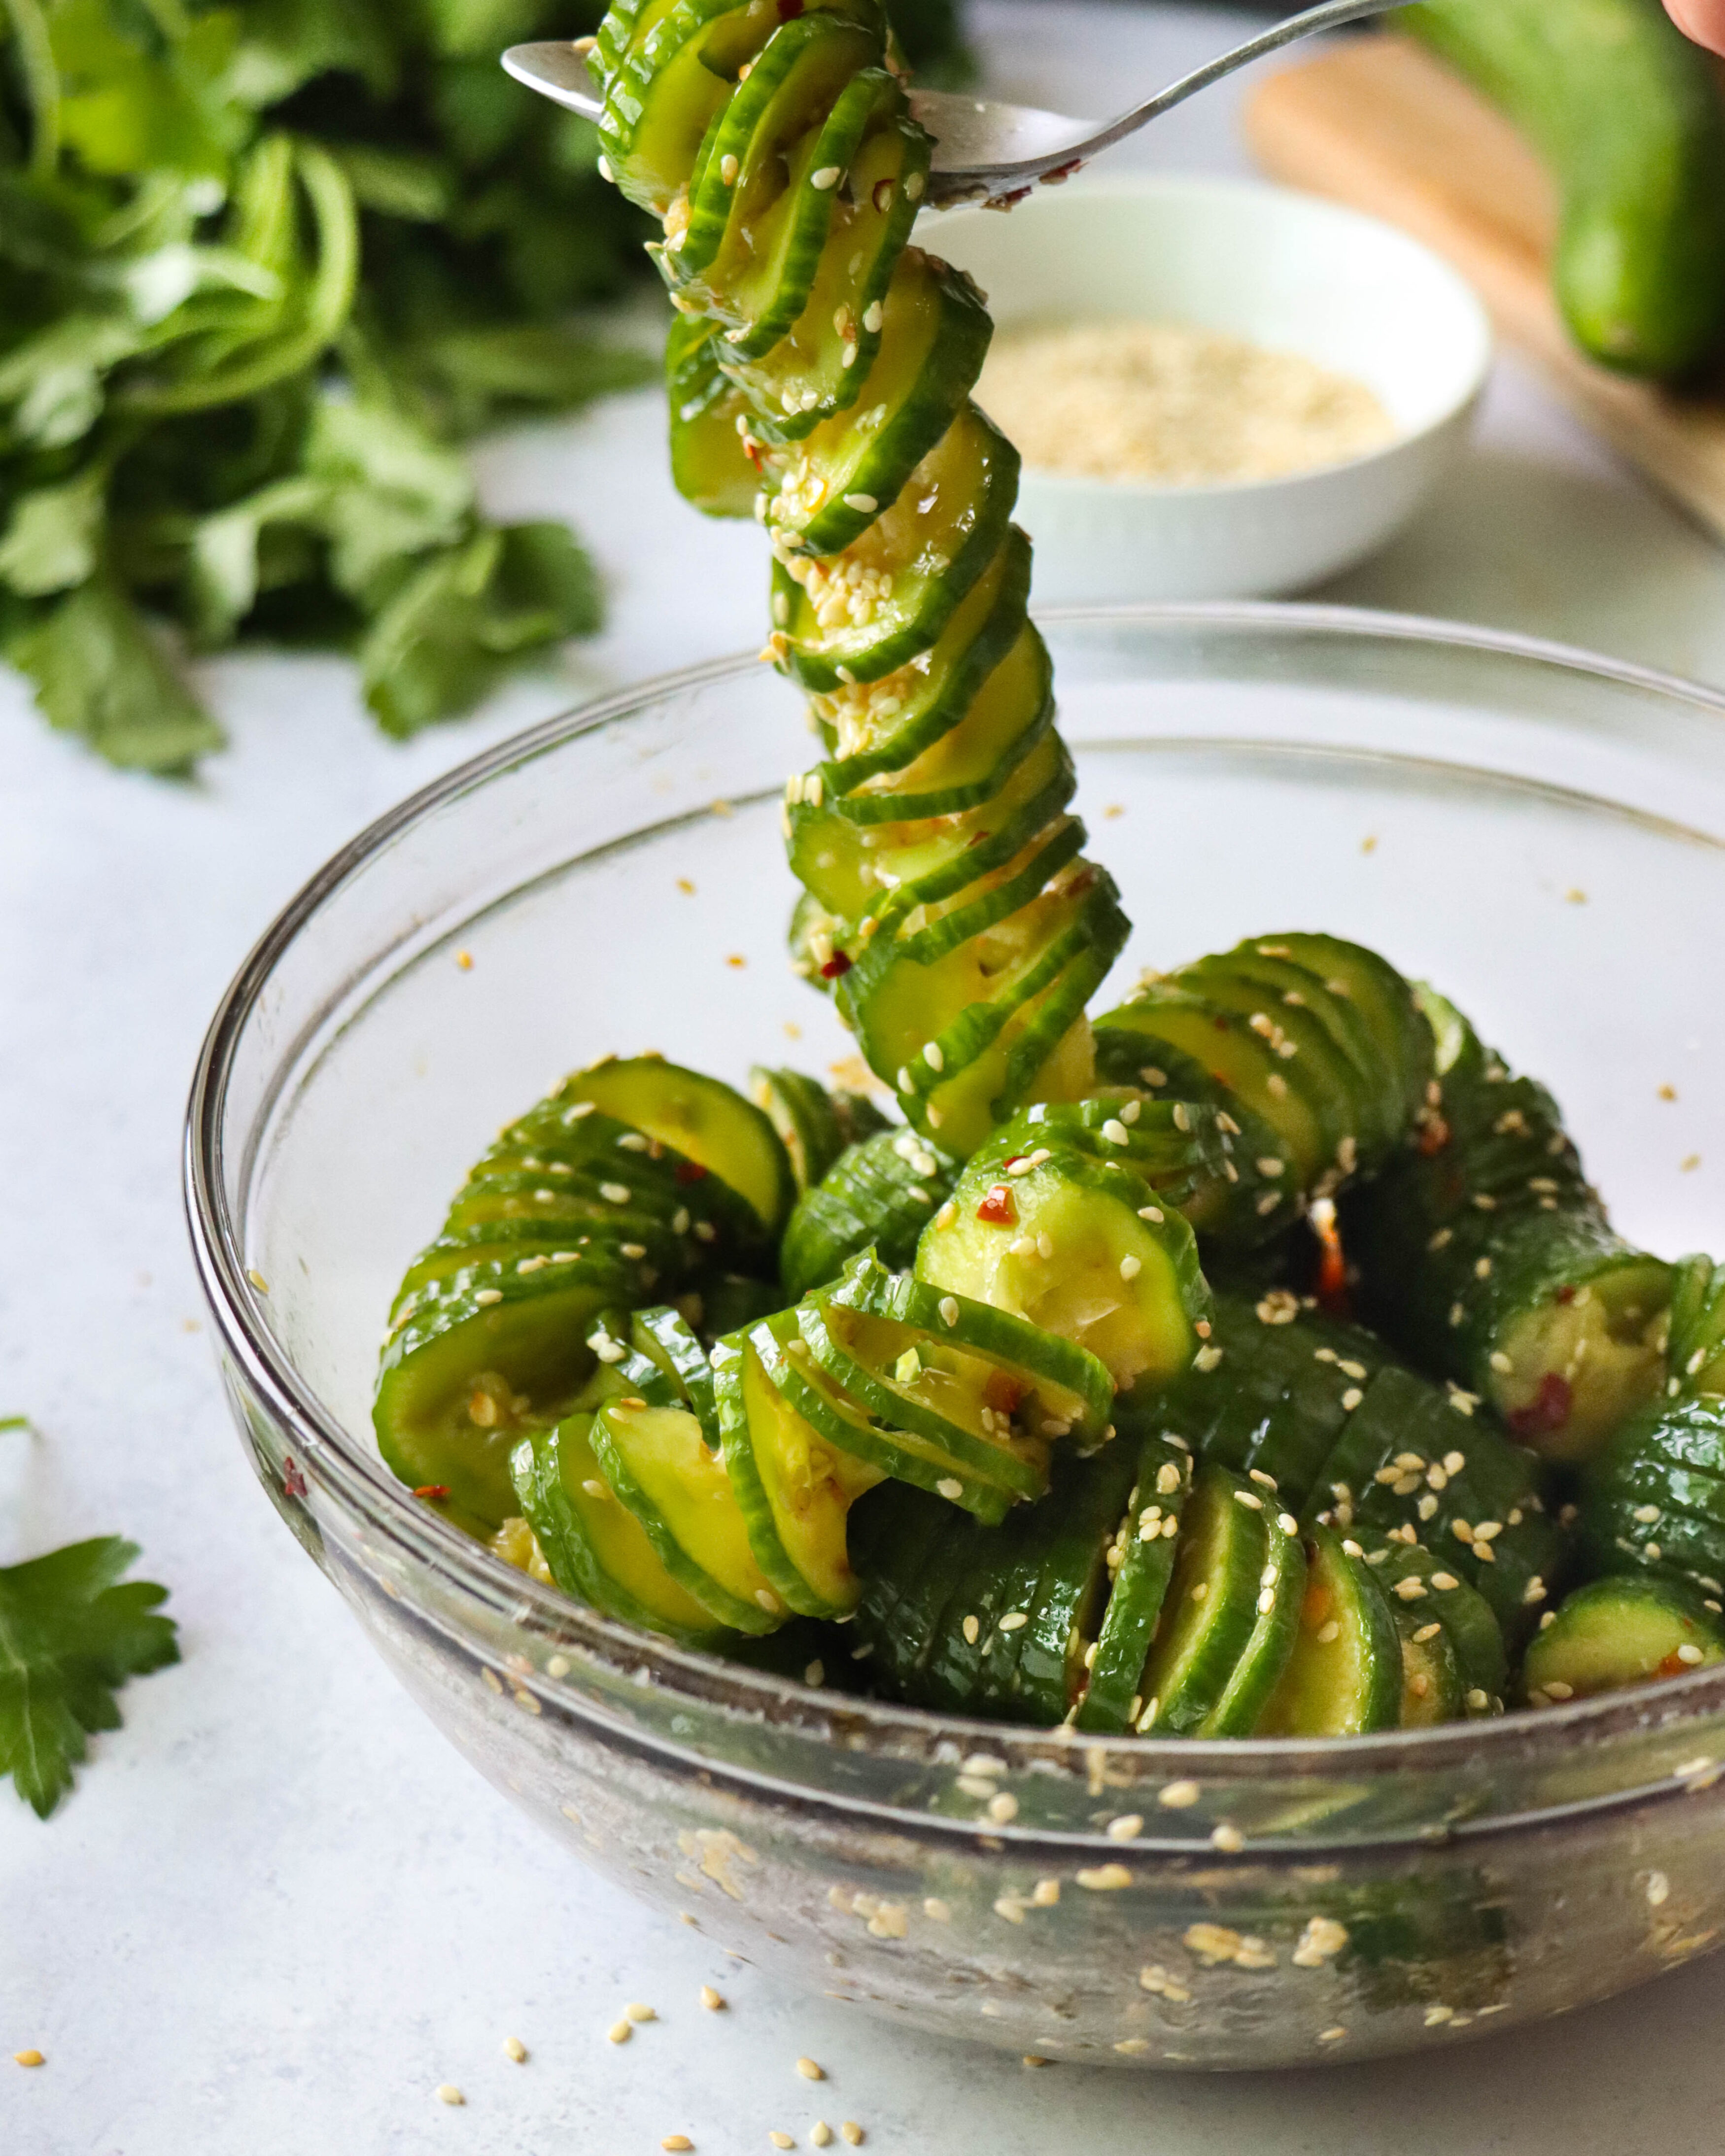 Cucumber Spiral Slicer To Make Fancy Salads - Inspire Uplift